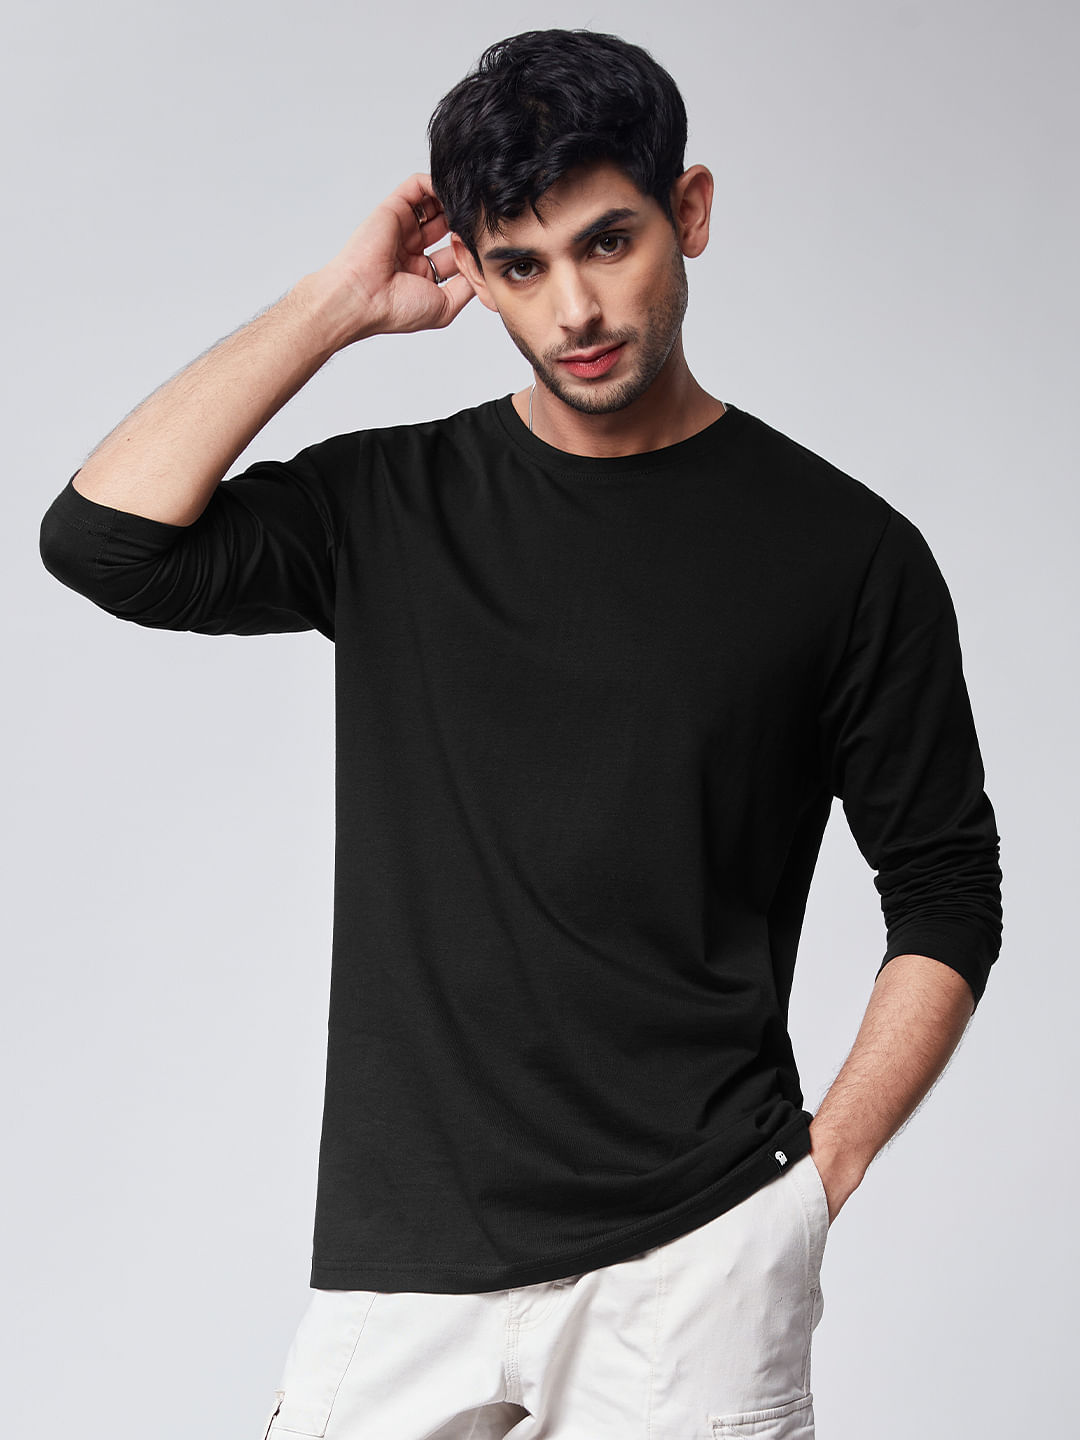 Buy Solids: Black T-Shirts Online